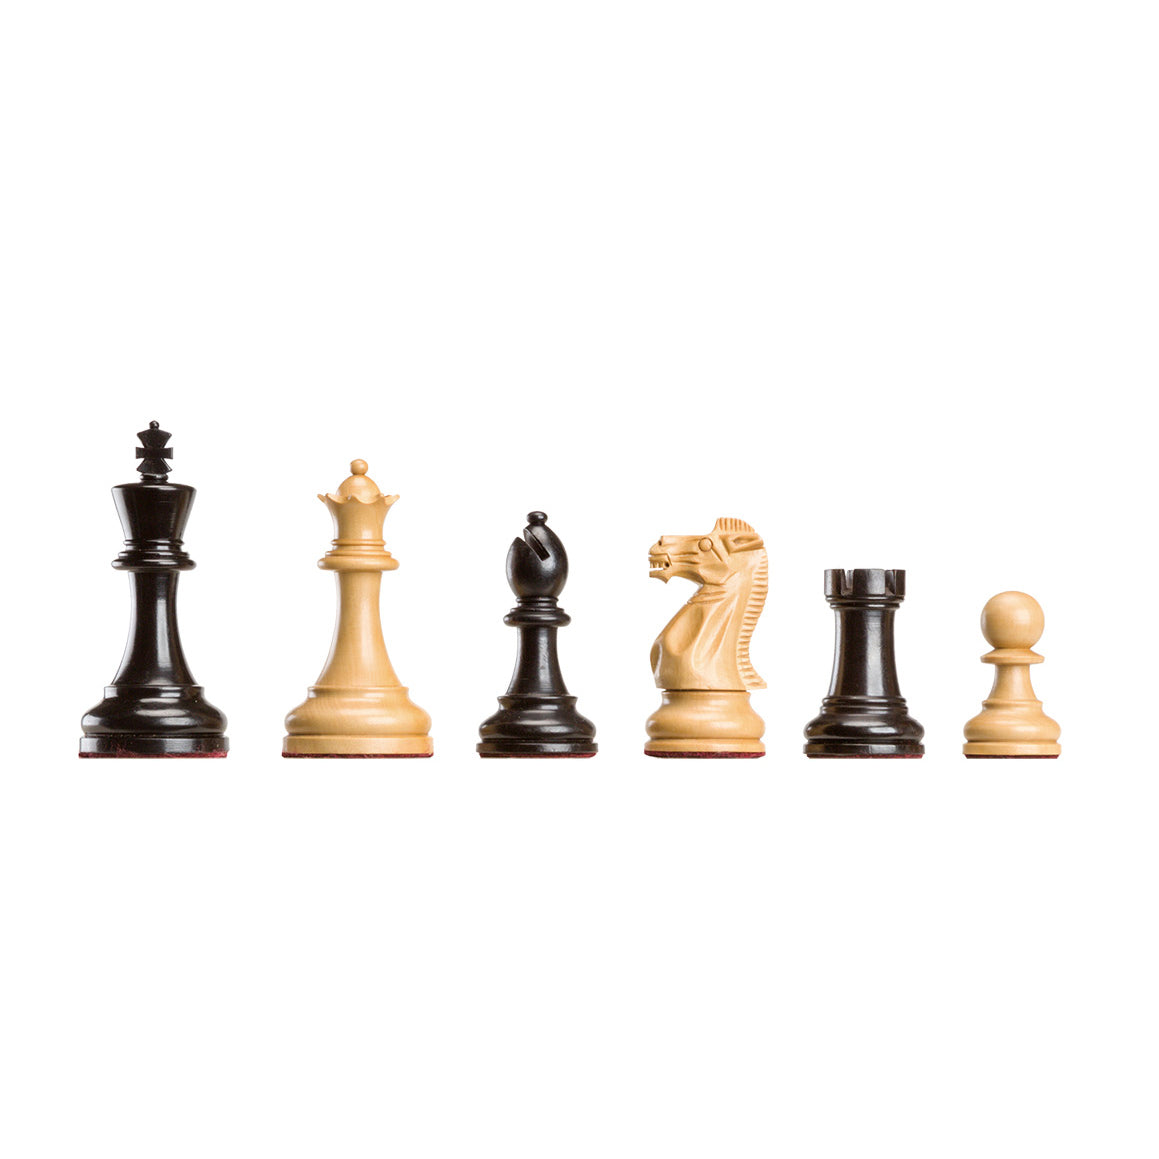 DGT Judit Polgar Luxury Chess Pieces